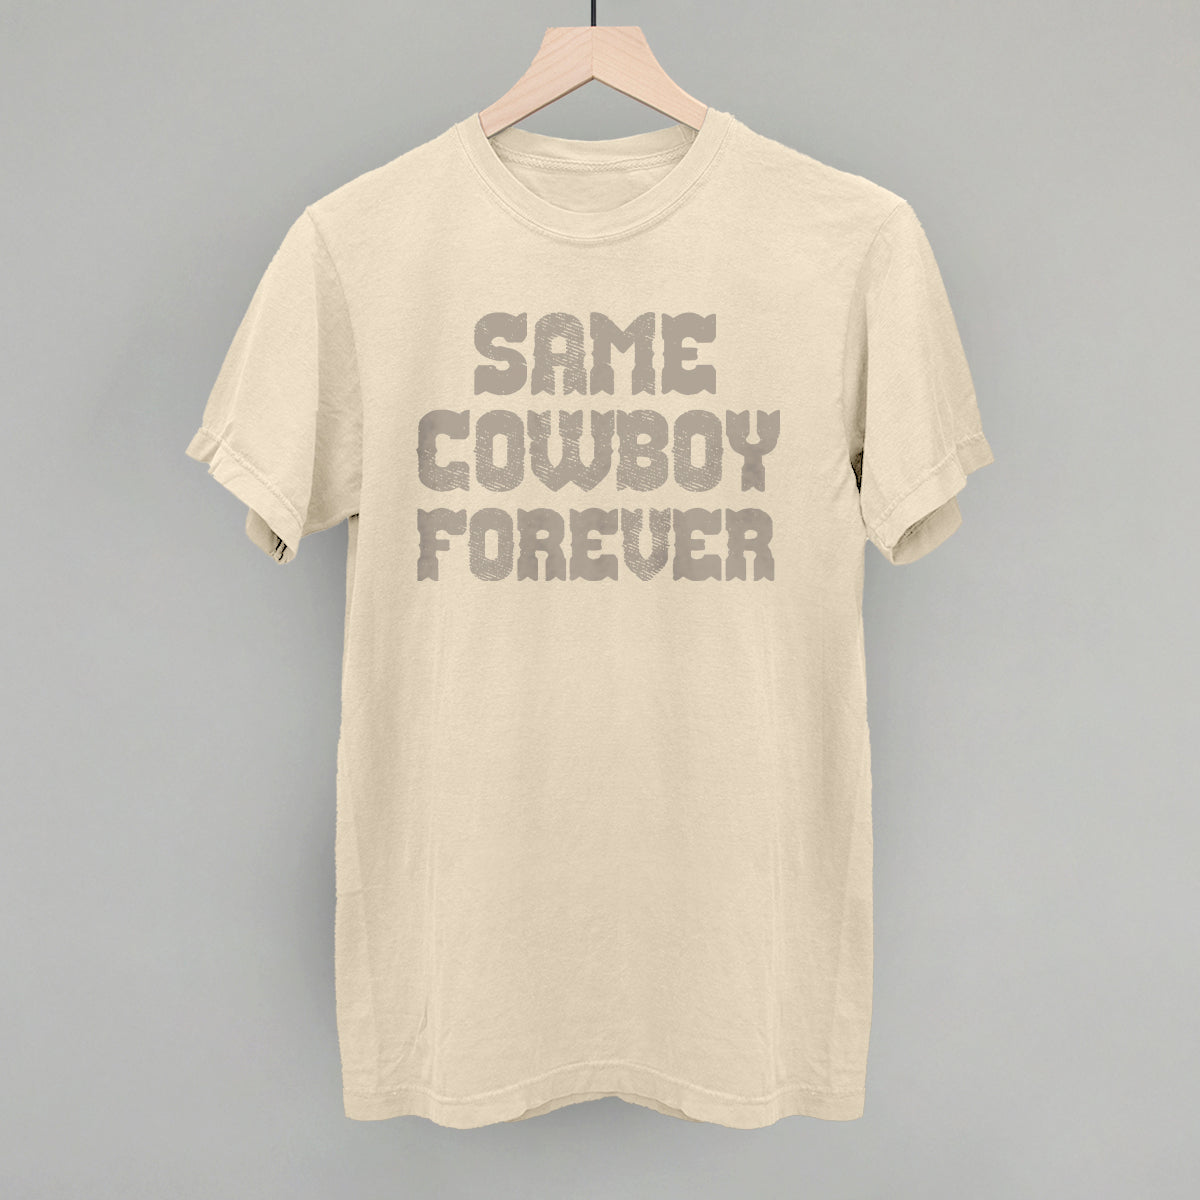 Same Cowboy Forever (Tan)